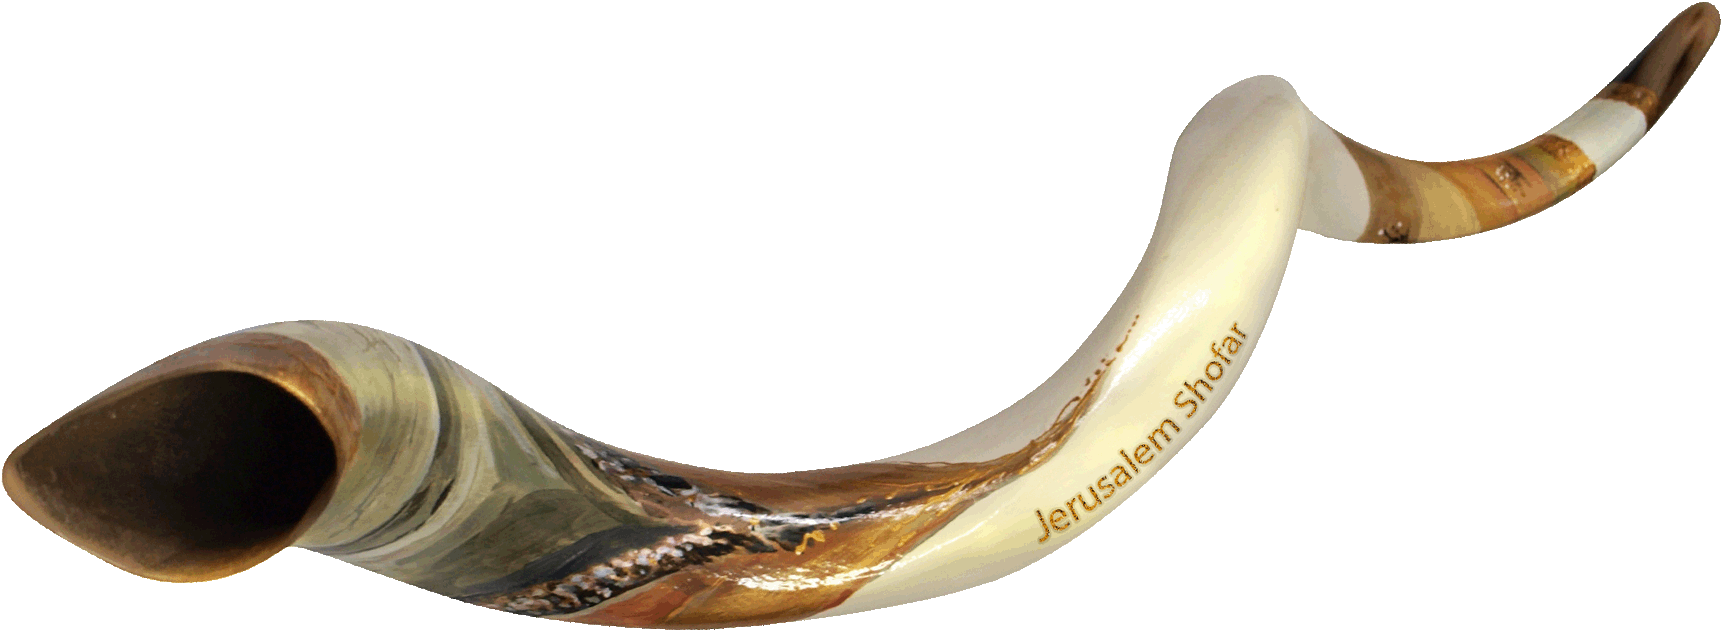 Rosh hashanah clipart shofar horn. Jewish new year will